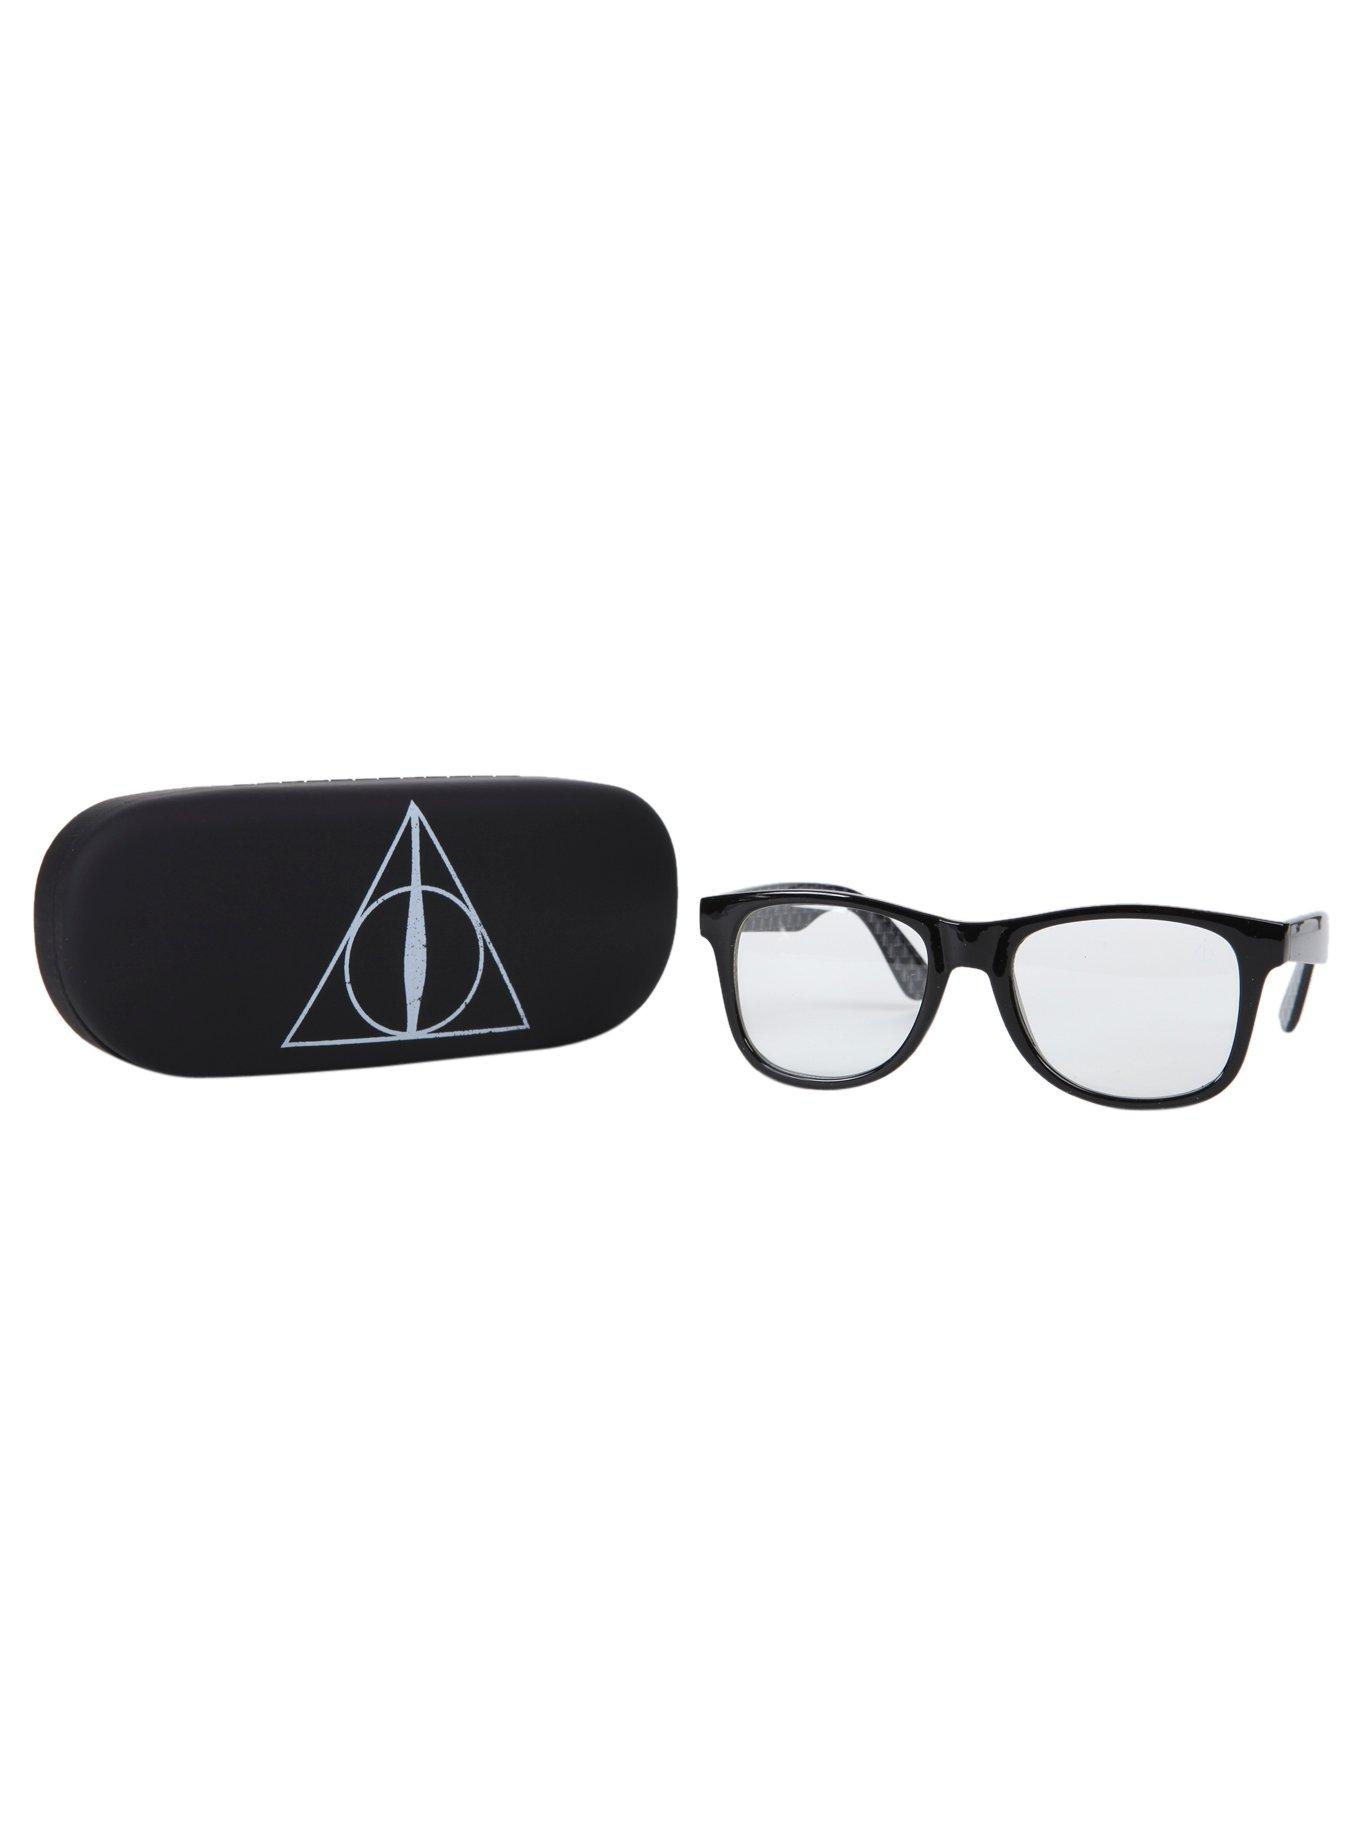 Harry Potter - Glasses - Case